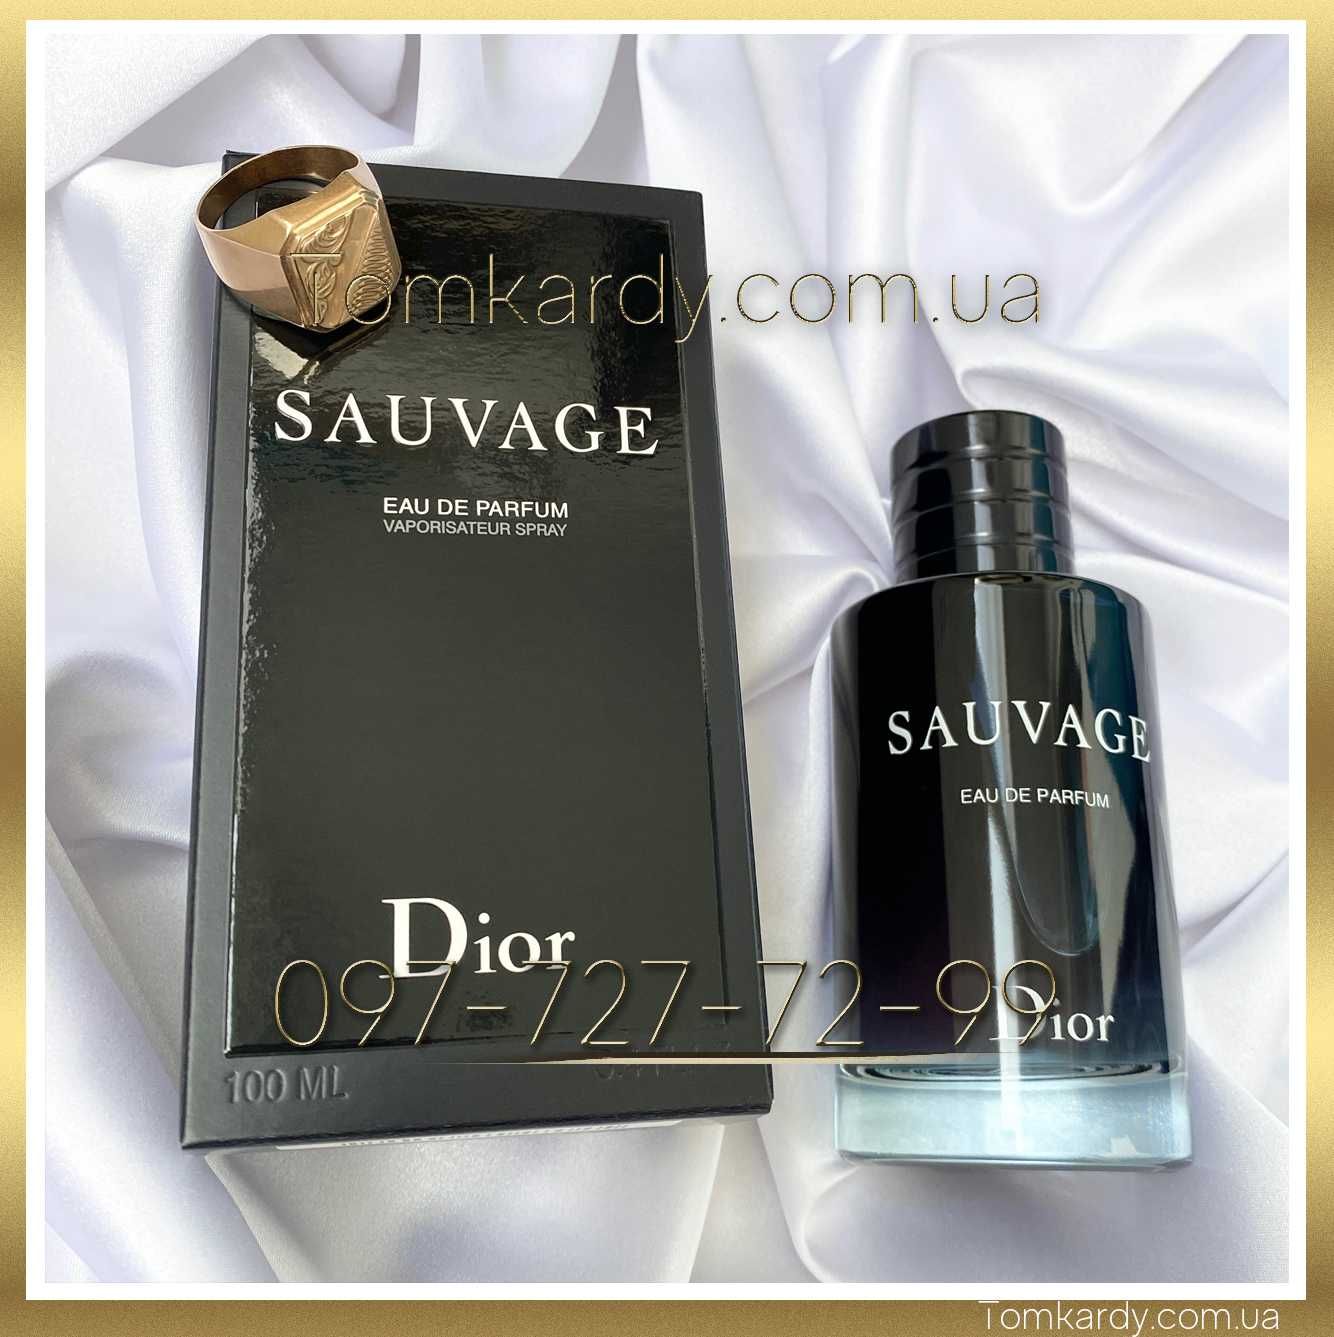 Мужские духи Dior Sauvage Eau de Parfum 100 ml. Диор Саваж